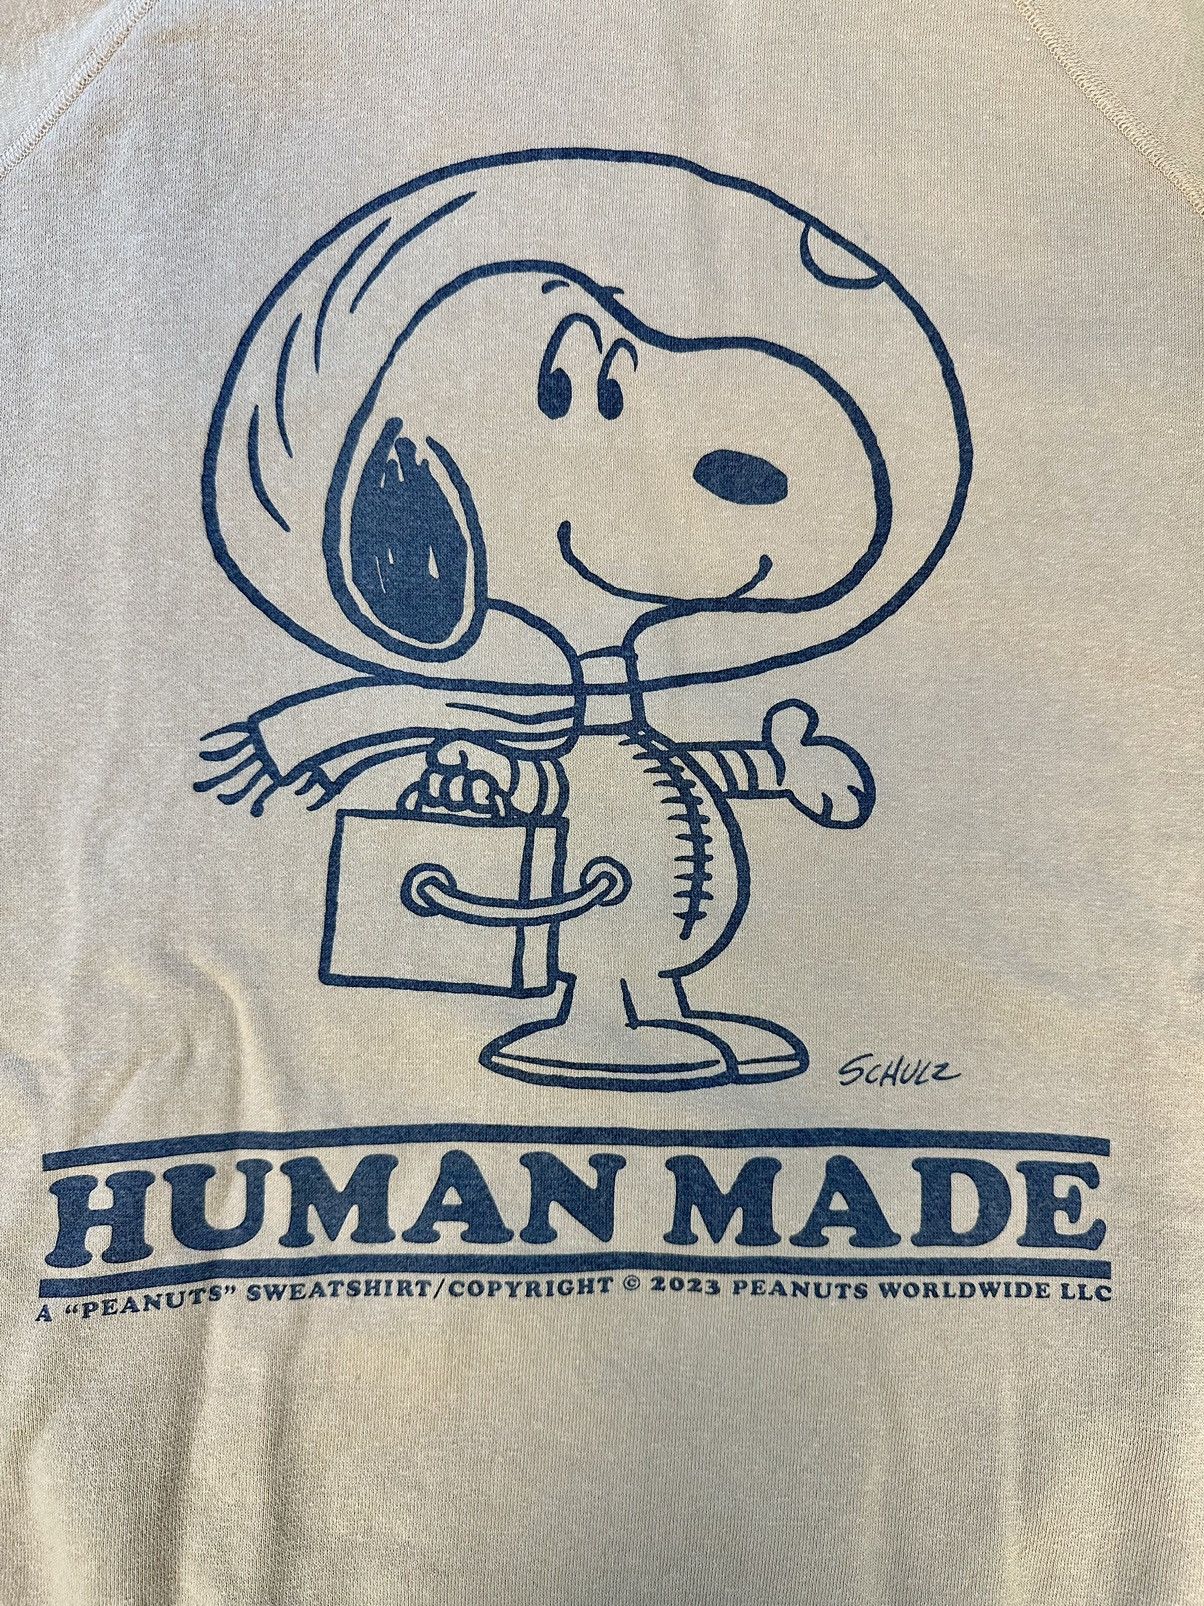 Human Made Humane Made x Peanuts snoopy sweater Nigo | Grailed